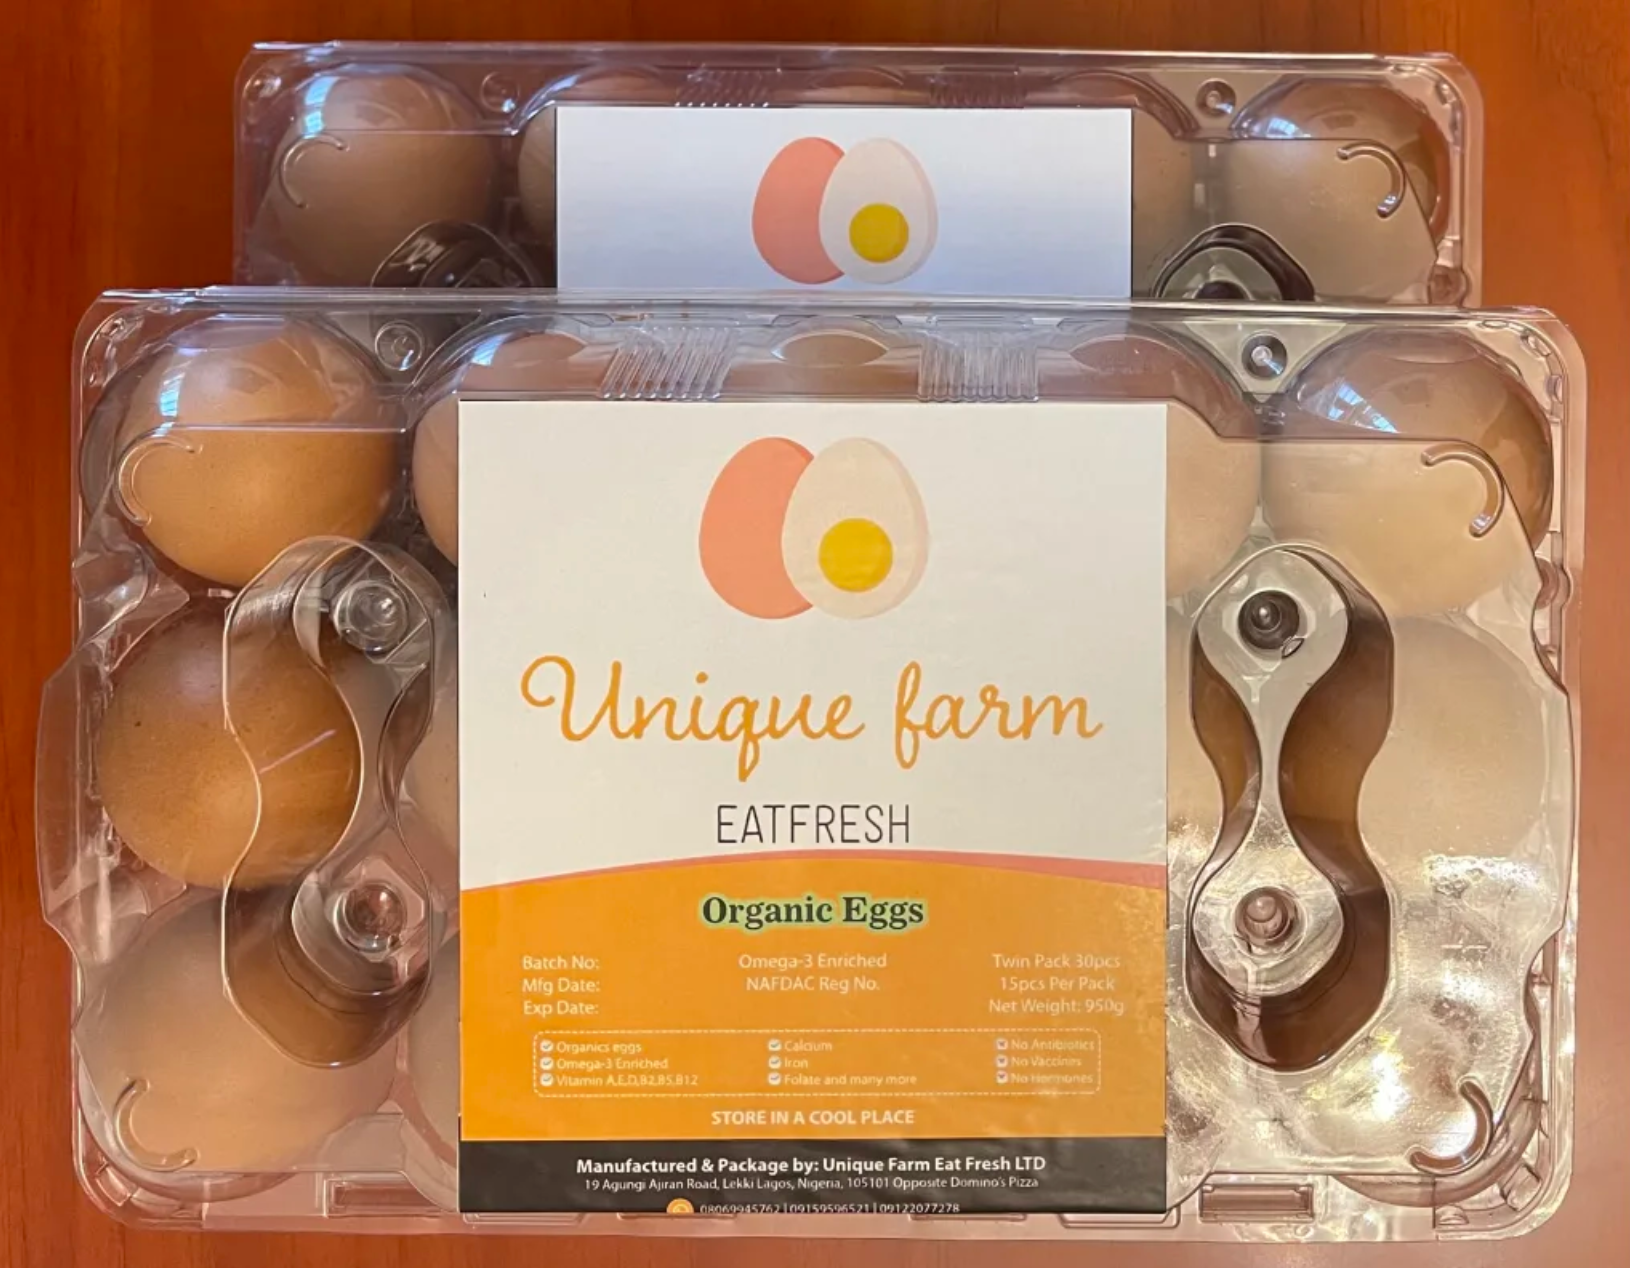 Unique Farm Set To Expand Their Organic Eggs Delivery Across Nigeria